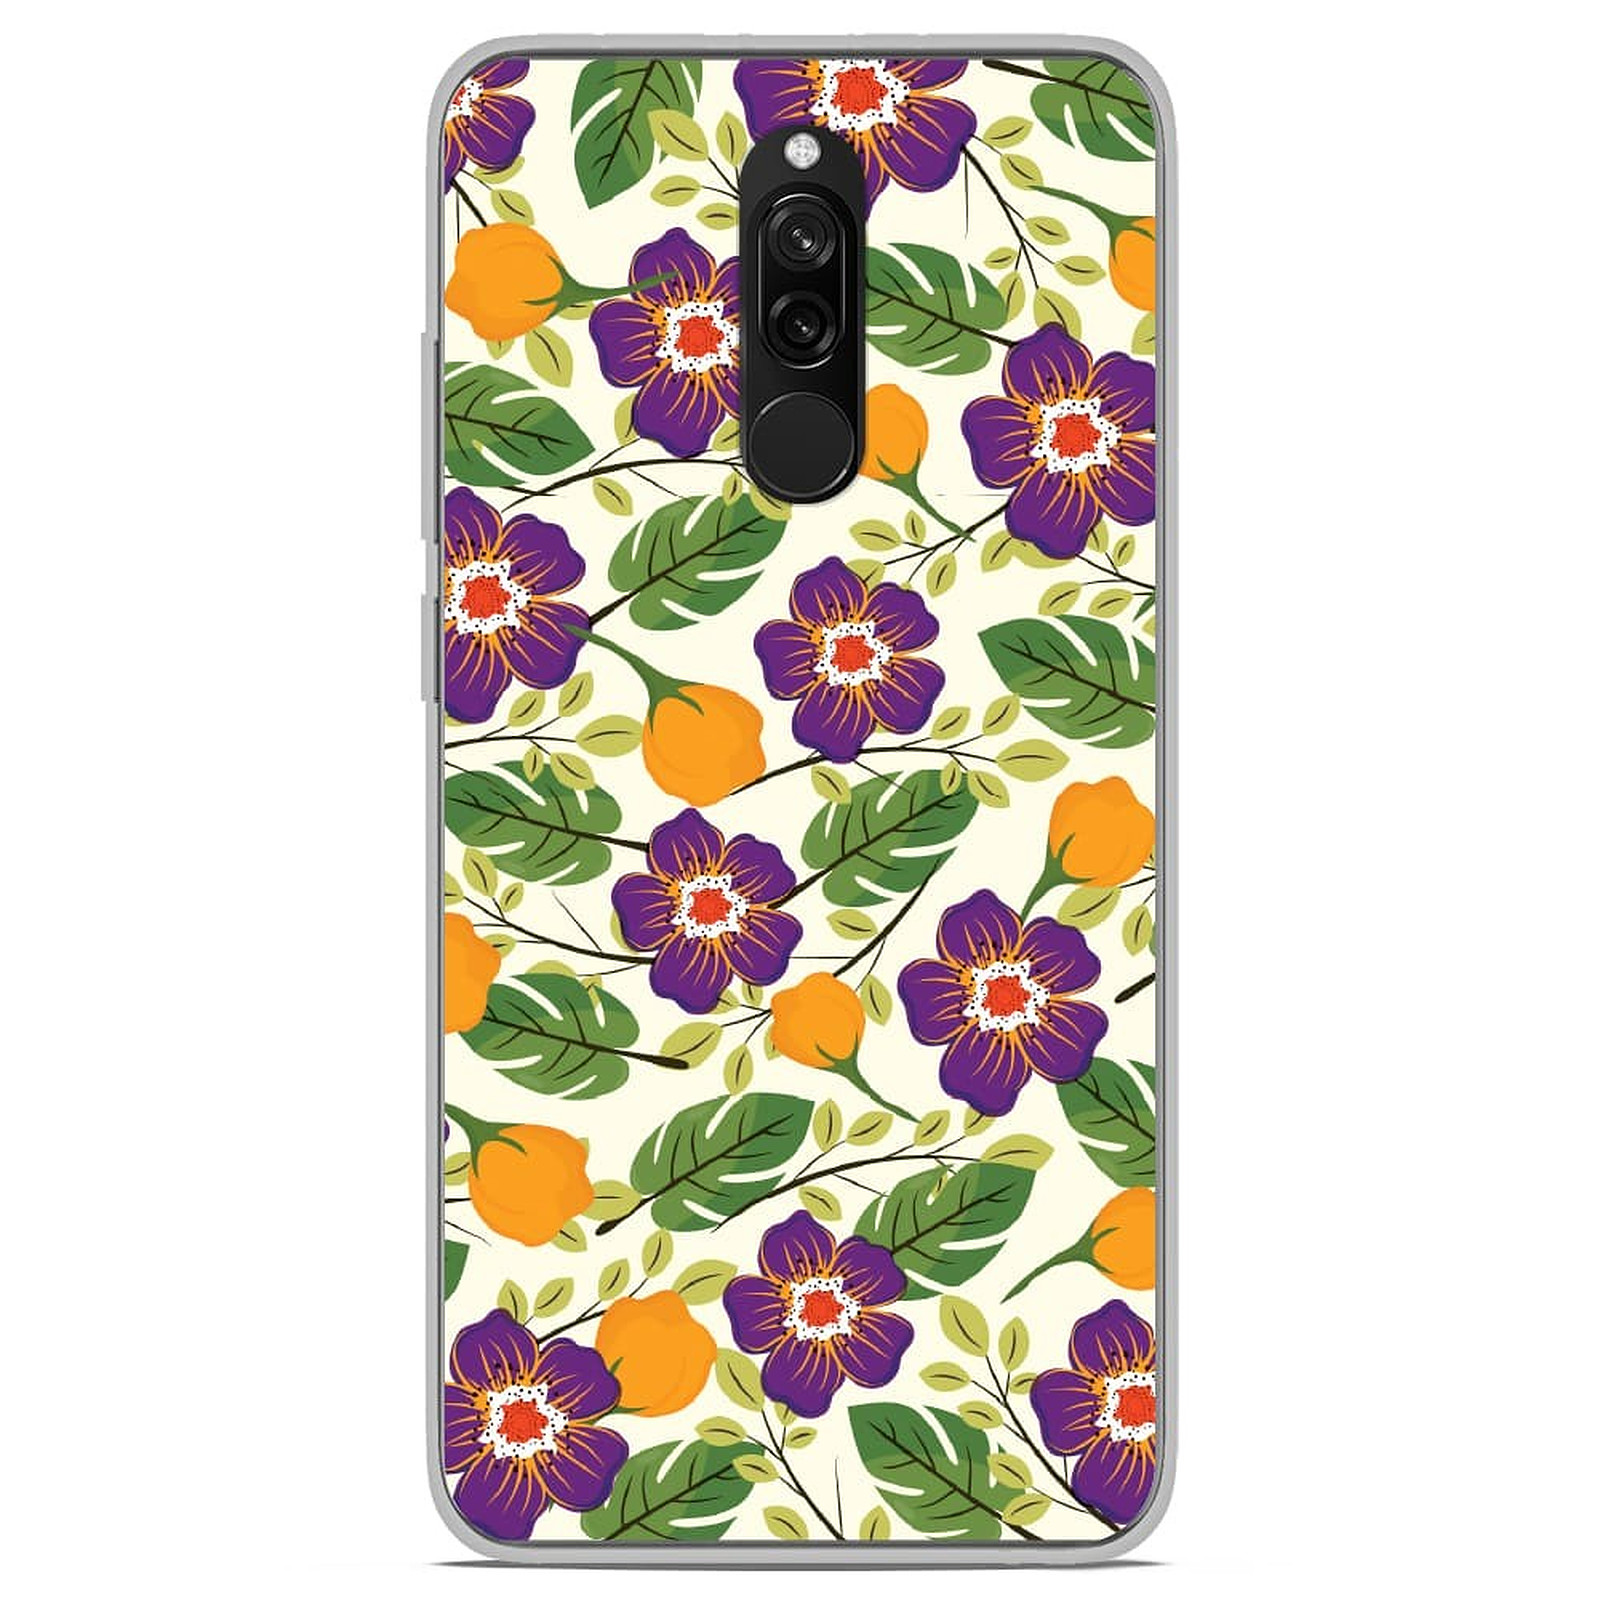 1001 Coques Coque silicone gel Xiaomi Redmi 7 motif Fleurs Violettes - Coque telephone 1001Coques